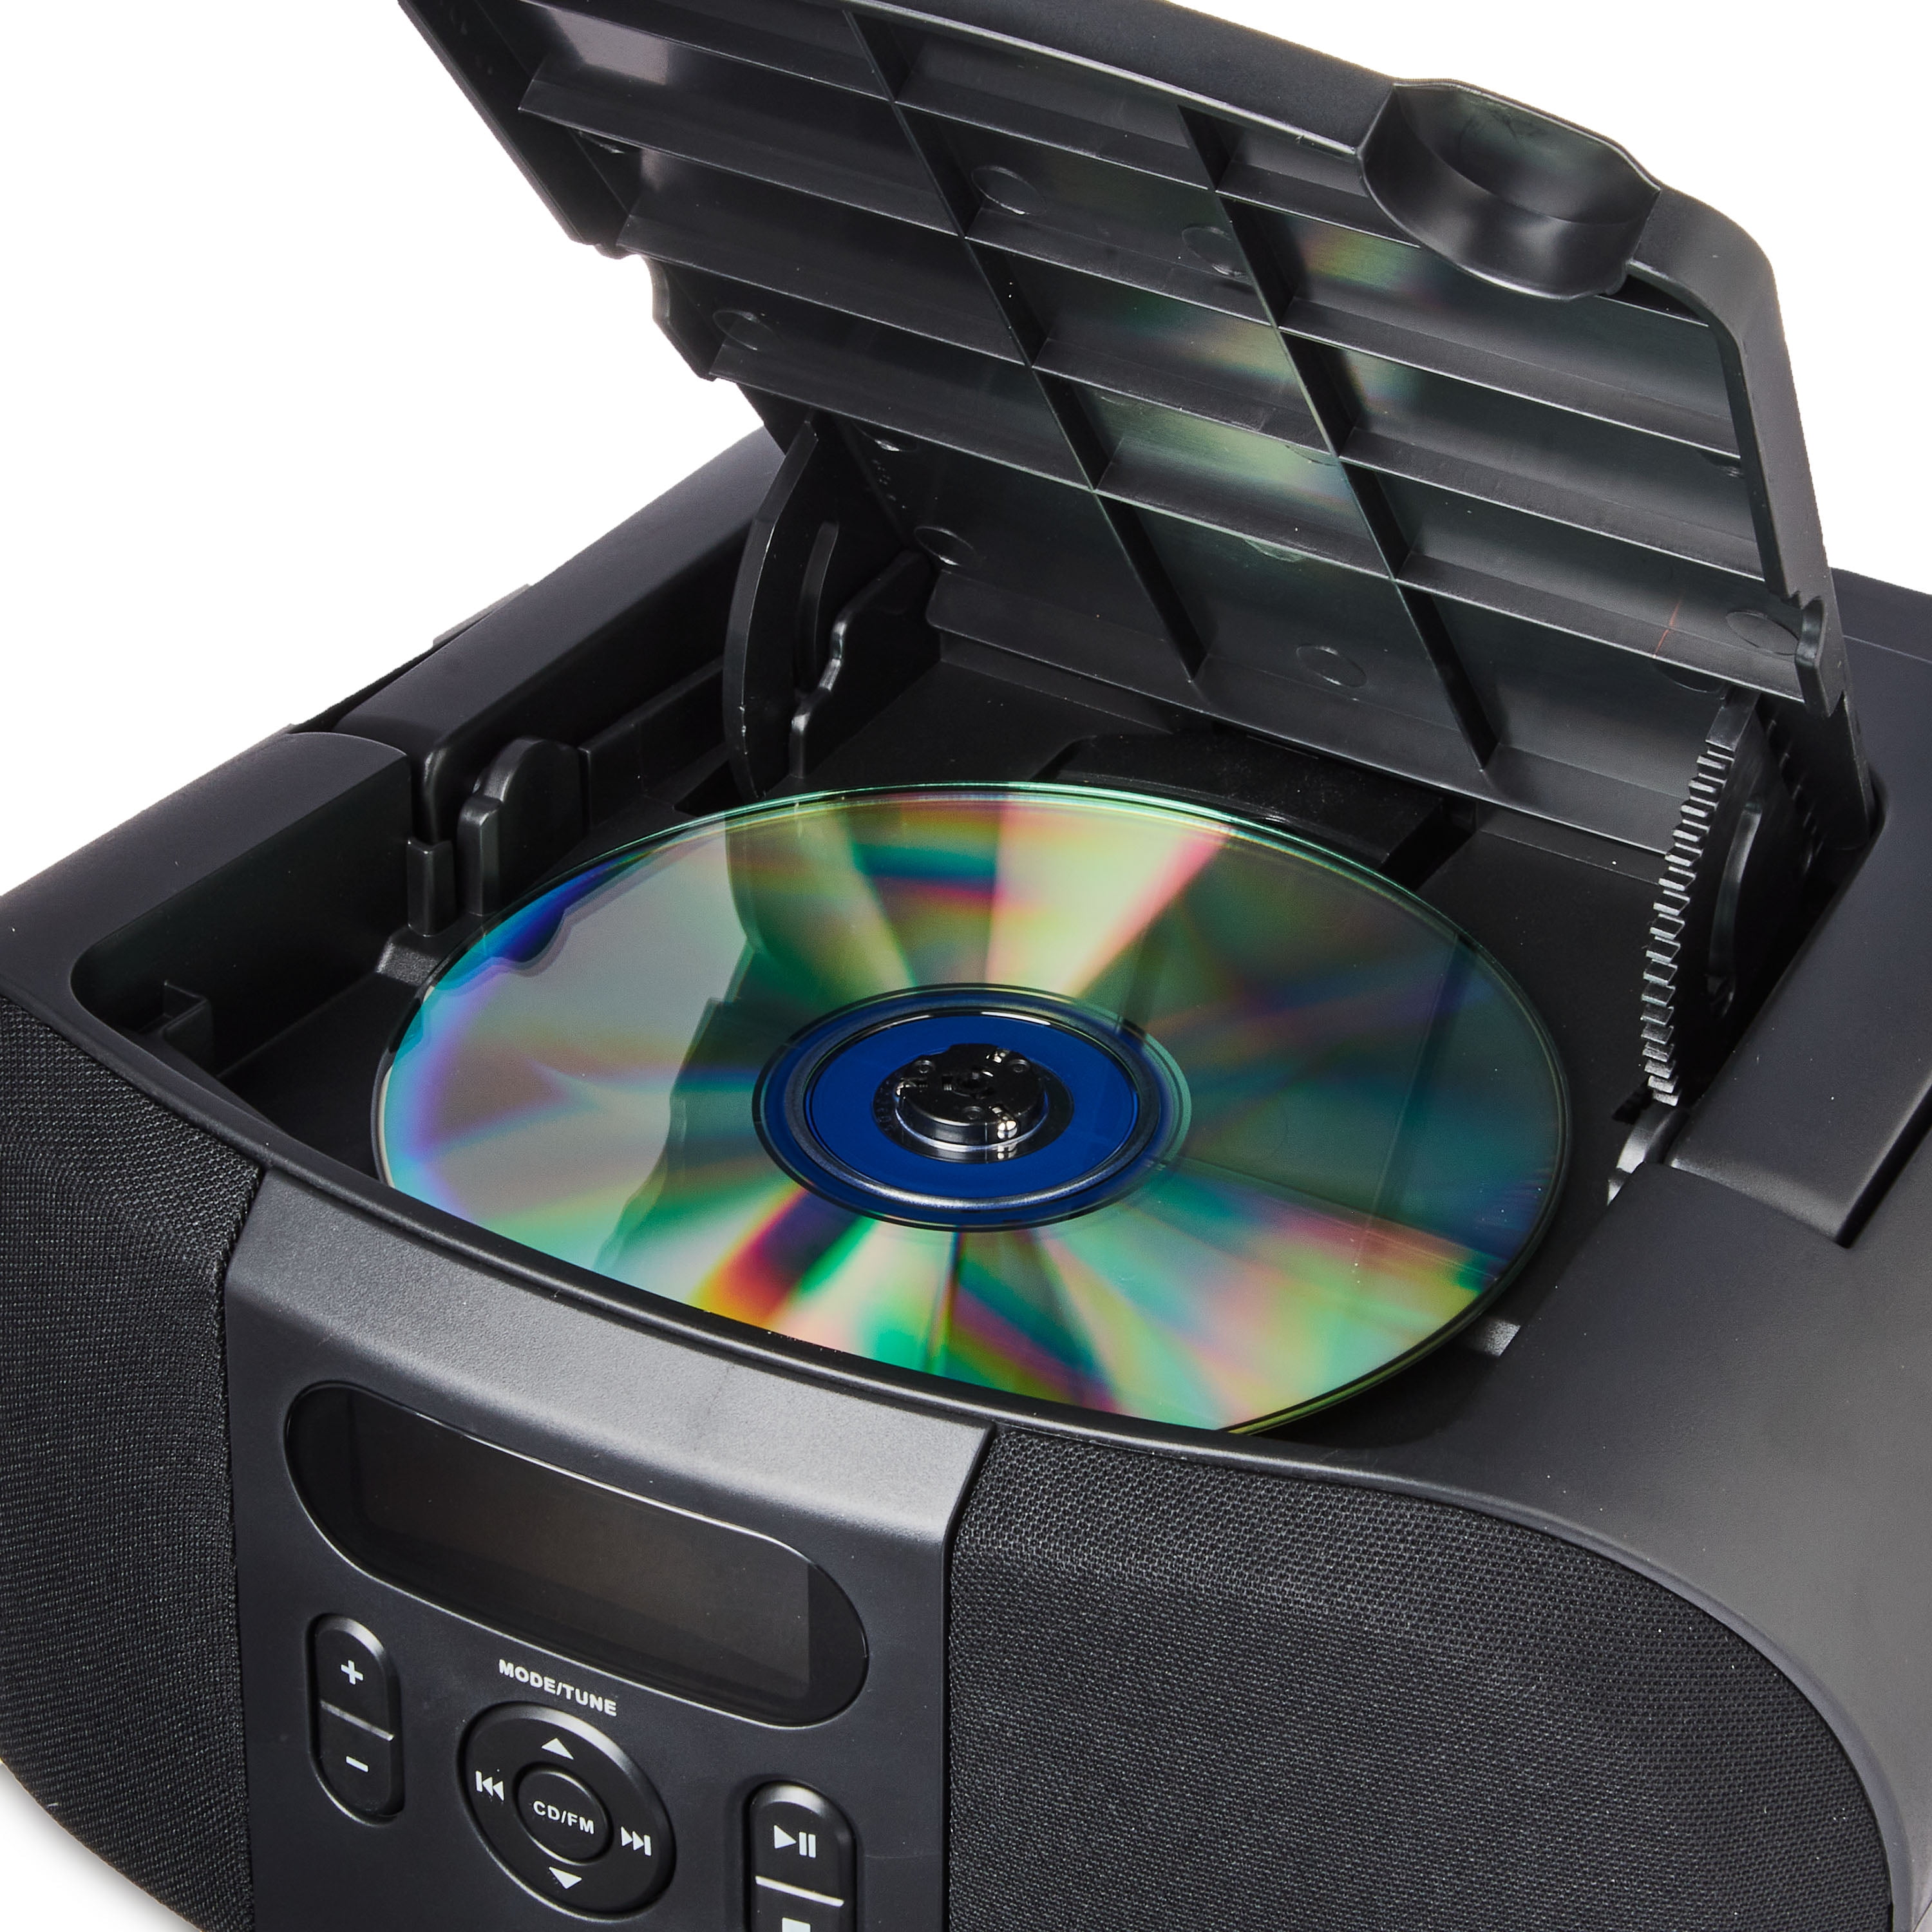 onn. Portable Bluetooth CD Boombox with Digital FM Radio 